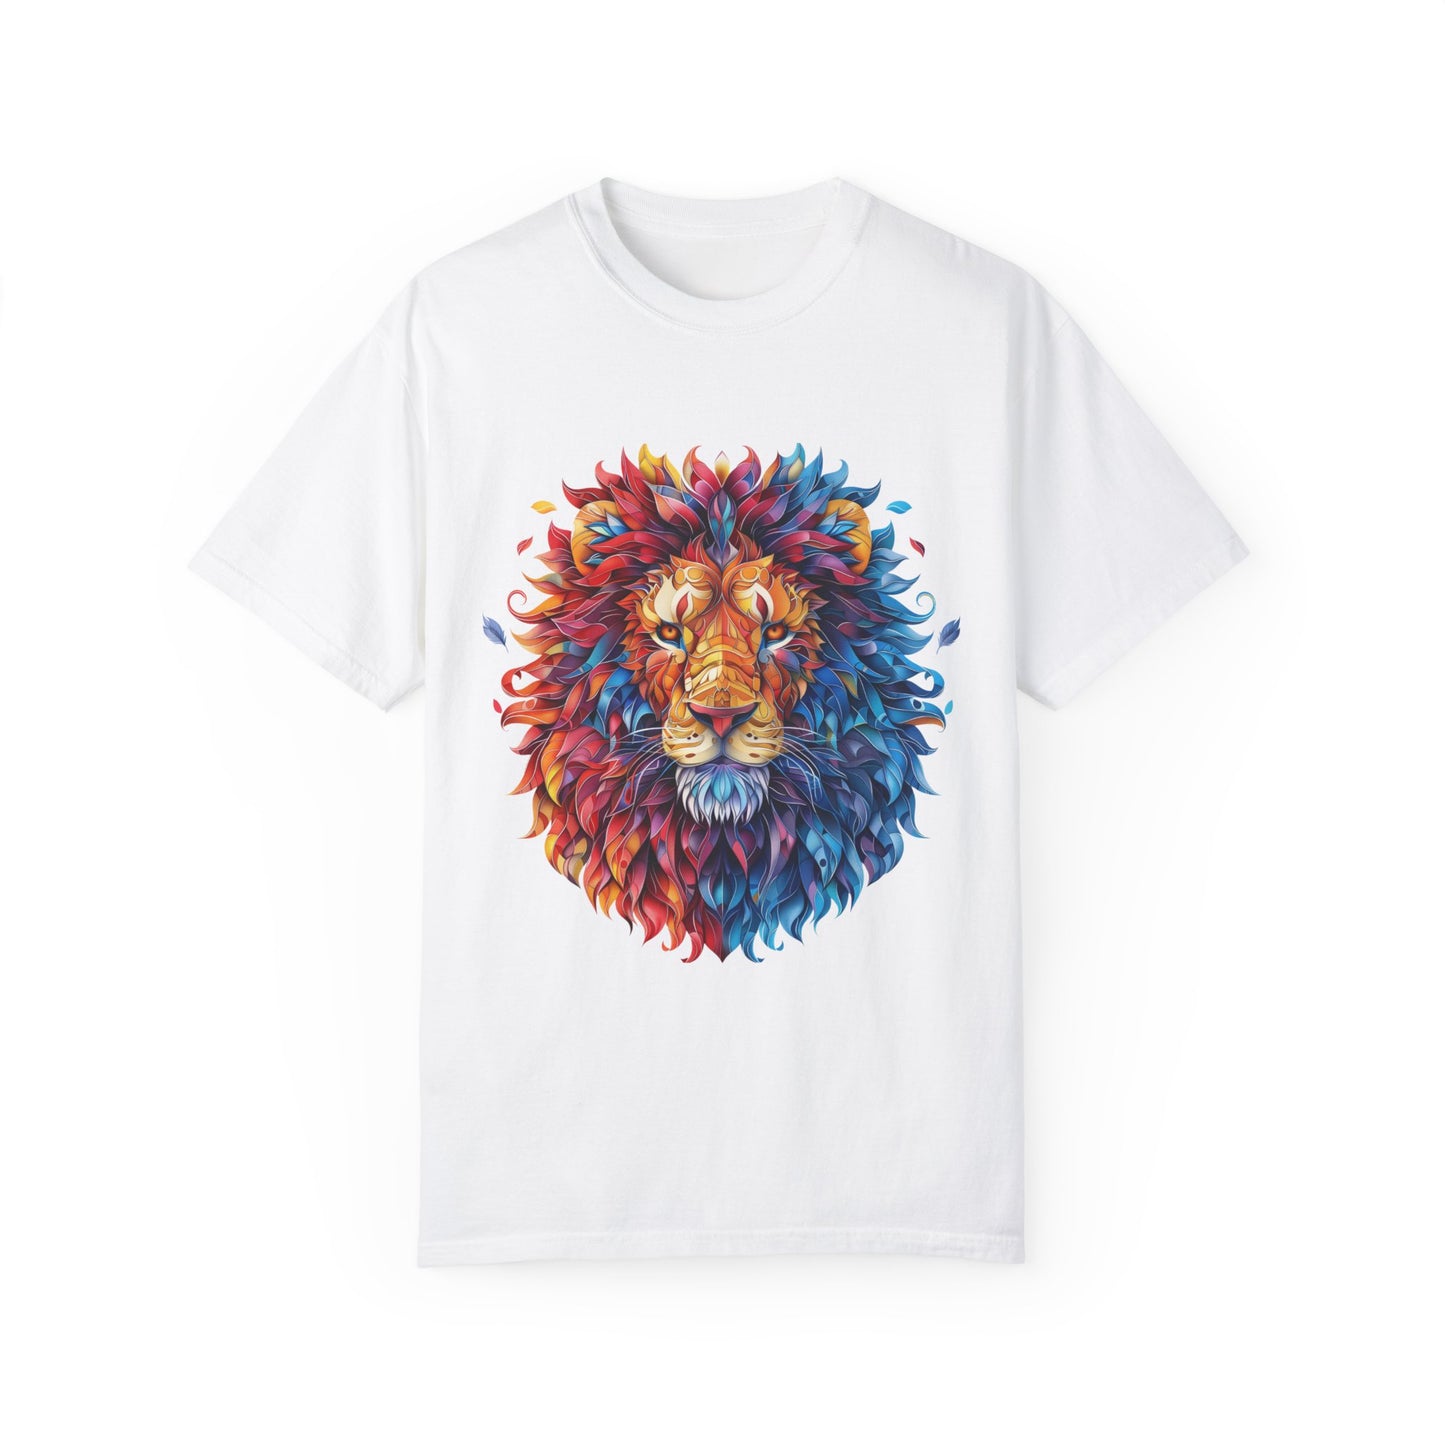 Lion Head Cool Graphic Design Novelty Unisex Garment-dyed T-shirt Cotton Funny Humorous Graphic Soft Premium Unisex Men Women White T-shirt Birthday Gift-3